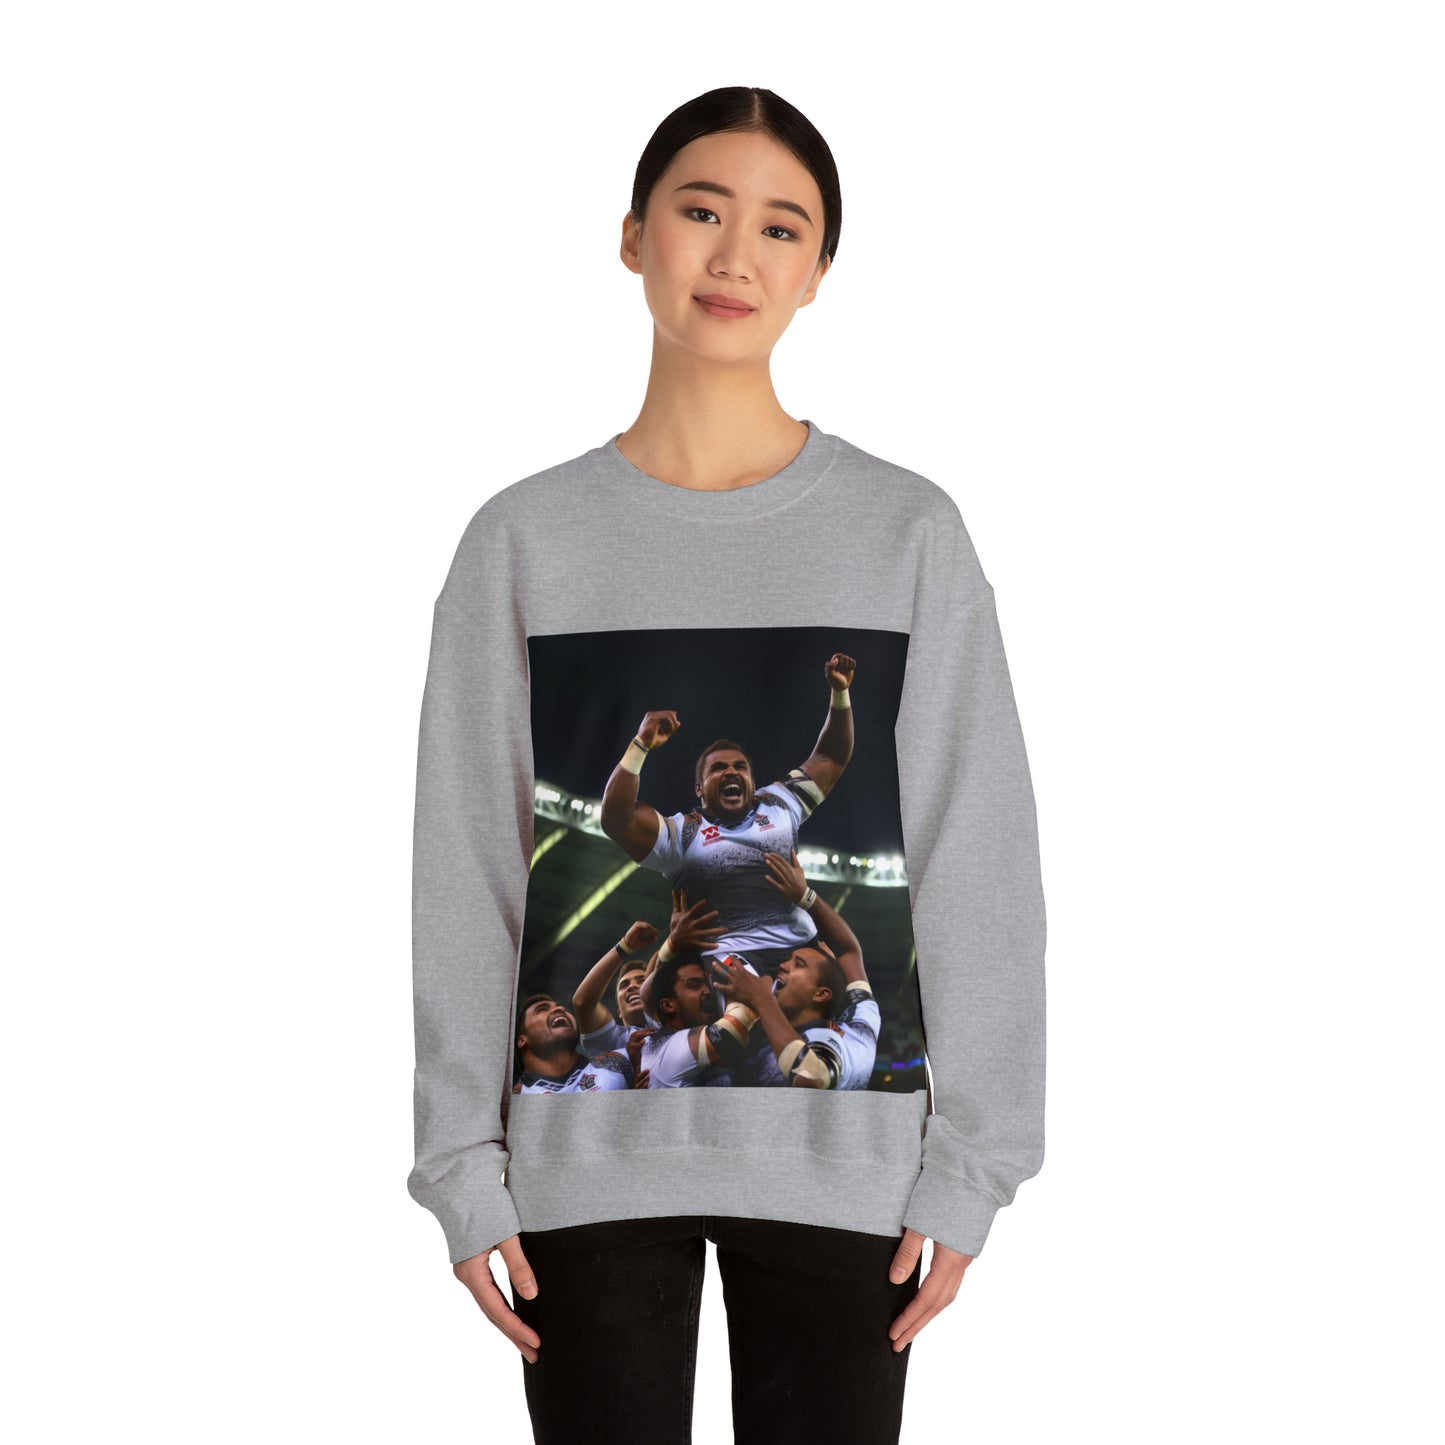 Fiji RWC Celebration - light sweatshirts